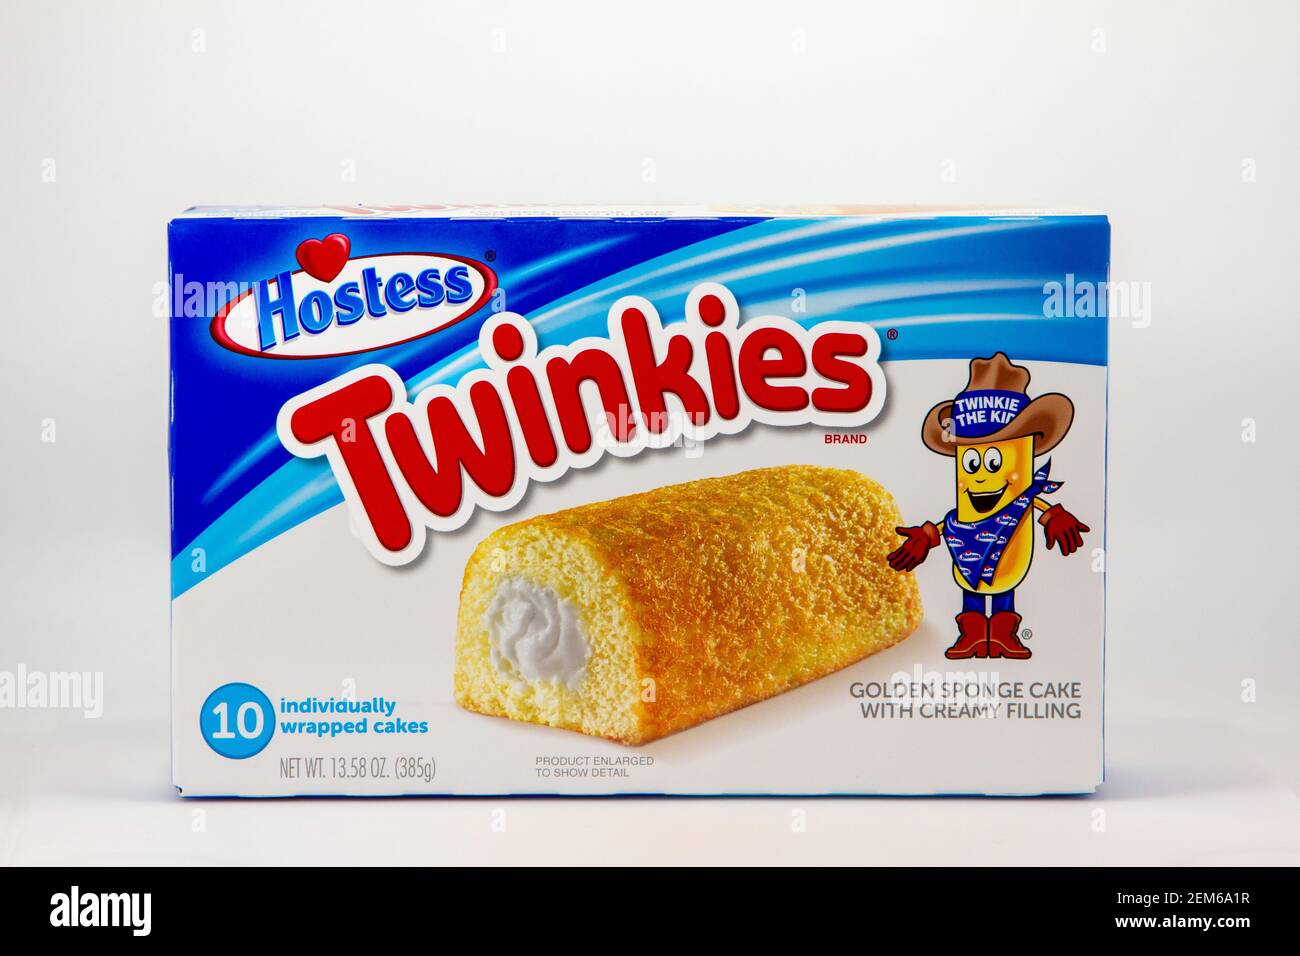 ST PAUL, MN, USA - JANUARY 19, 2021: Hostess Twinkies package and trademark logo. Stock Photo